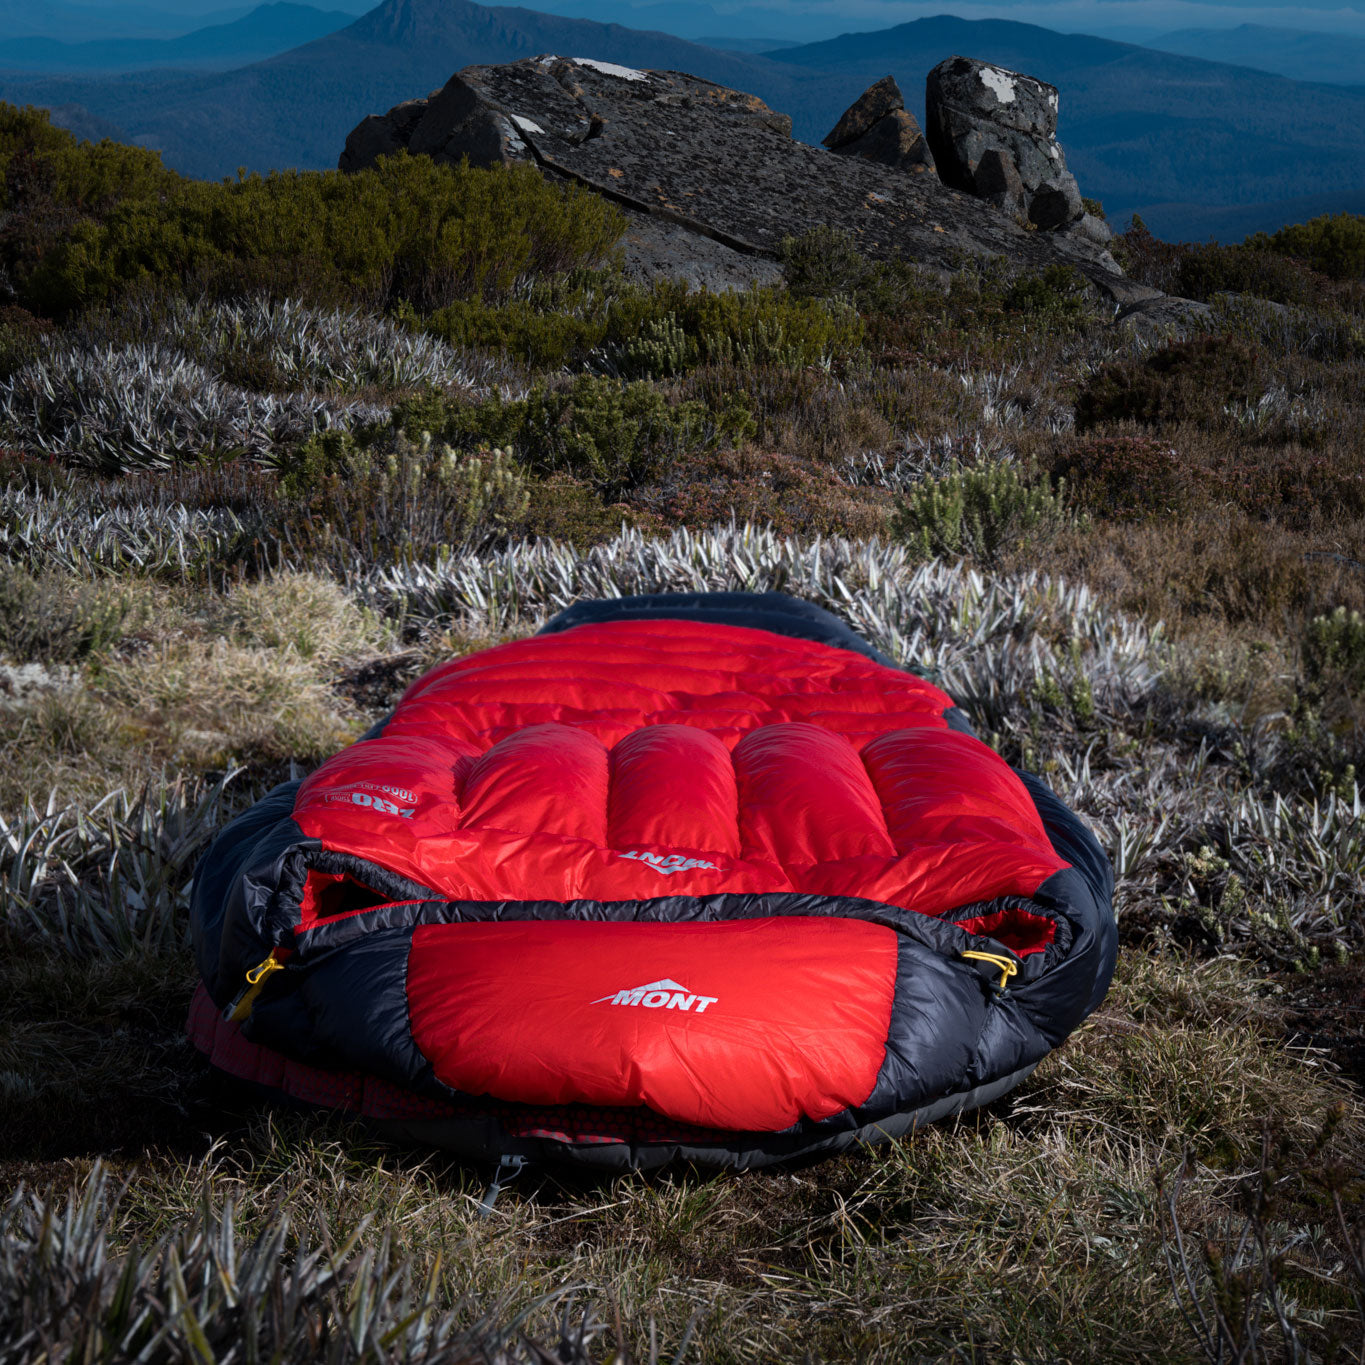 Zero Superlight Sleeping Bag : Review - Mont Adventure Equipment